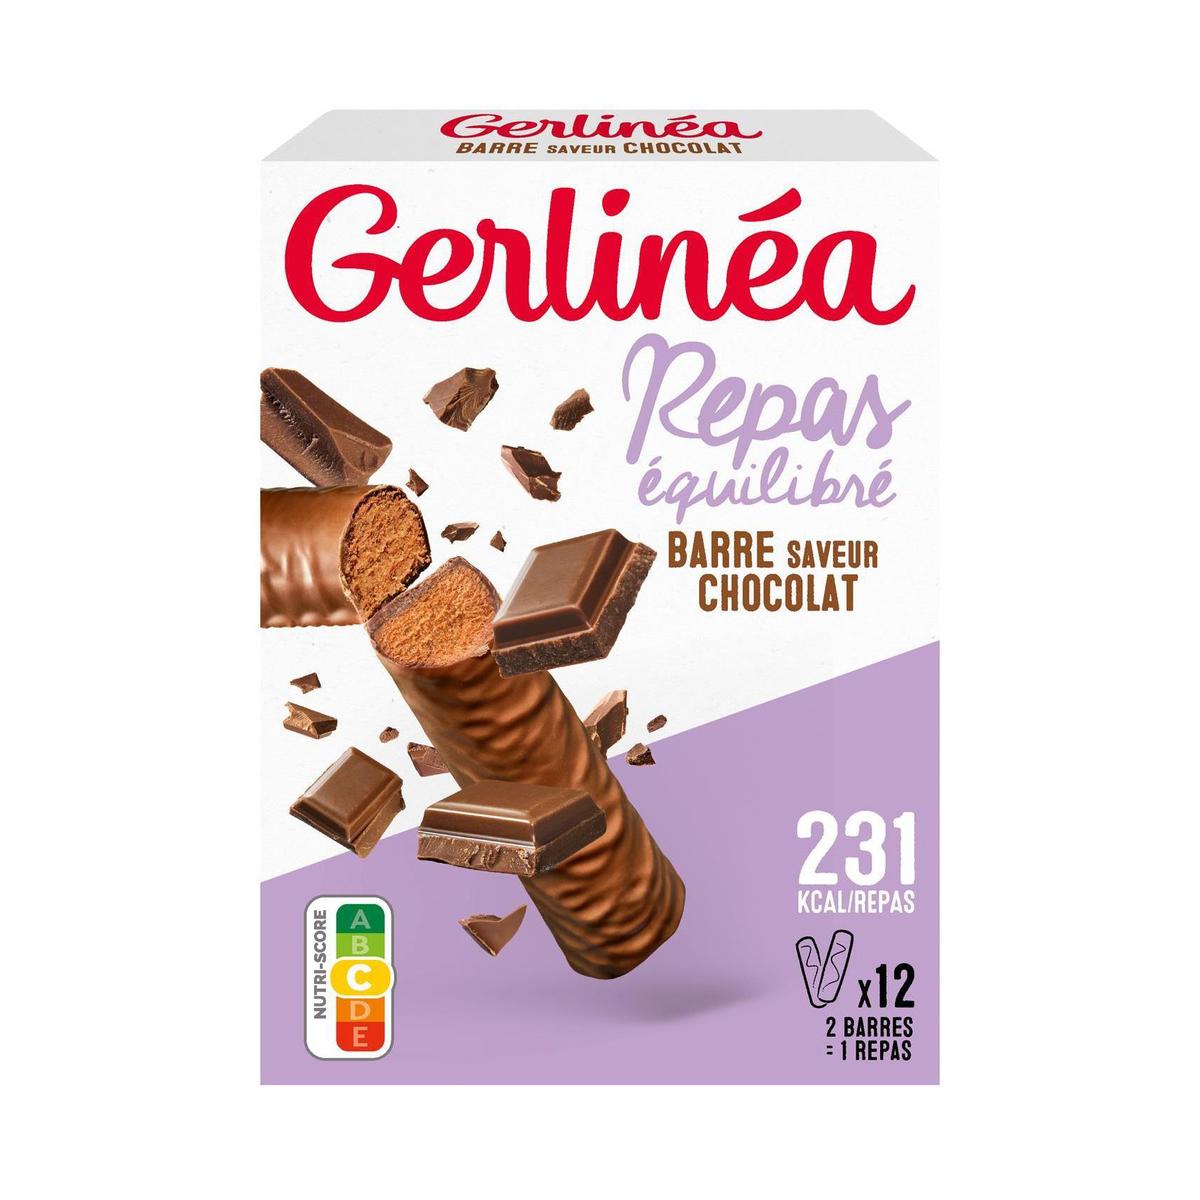 Gerlinea, saveur chocolat - GerlinéaMon Repas - 12 x 31g